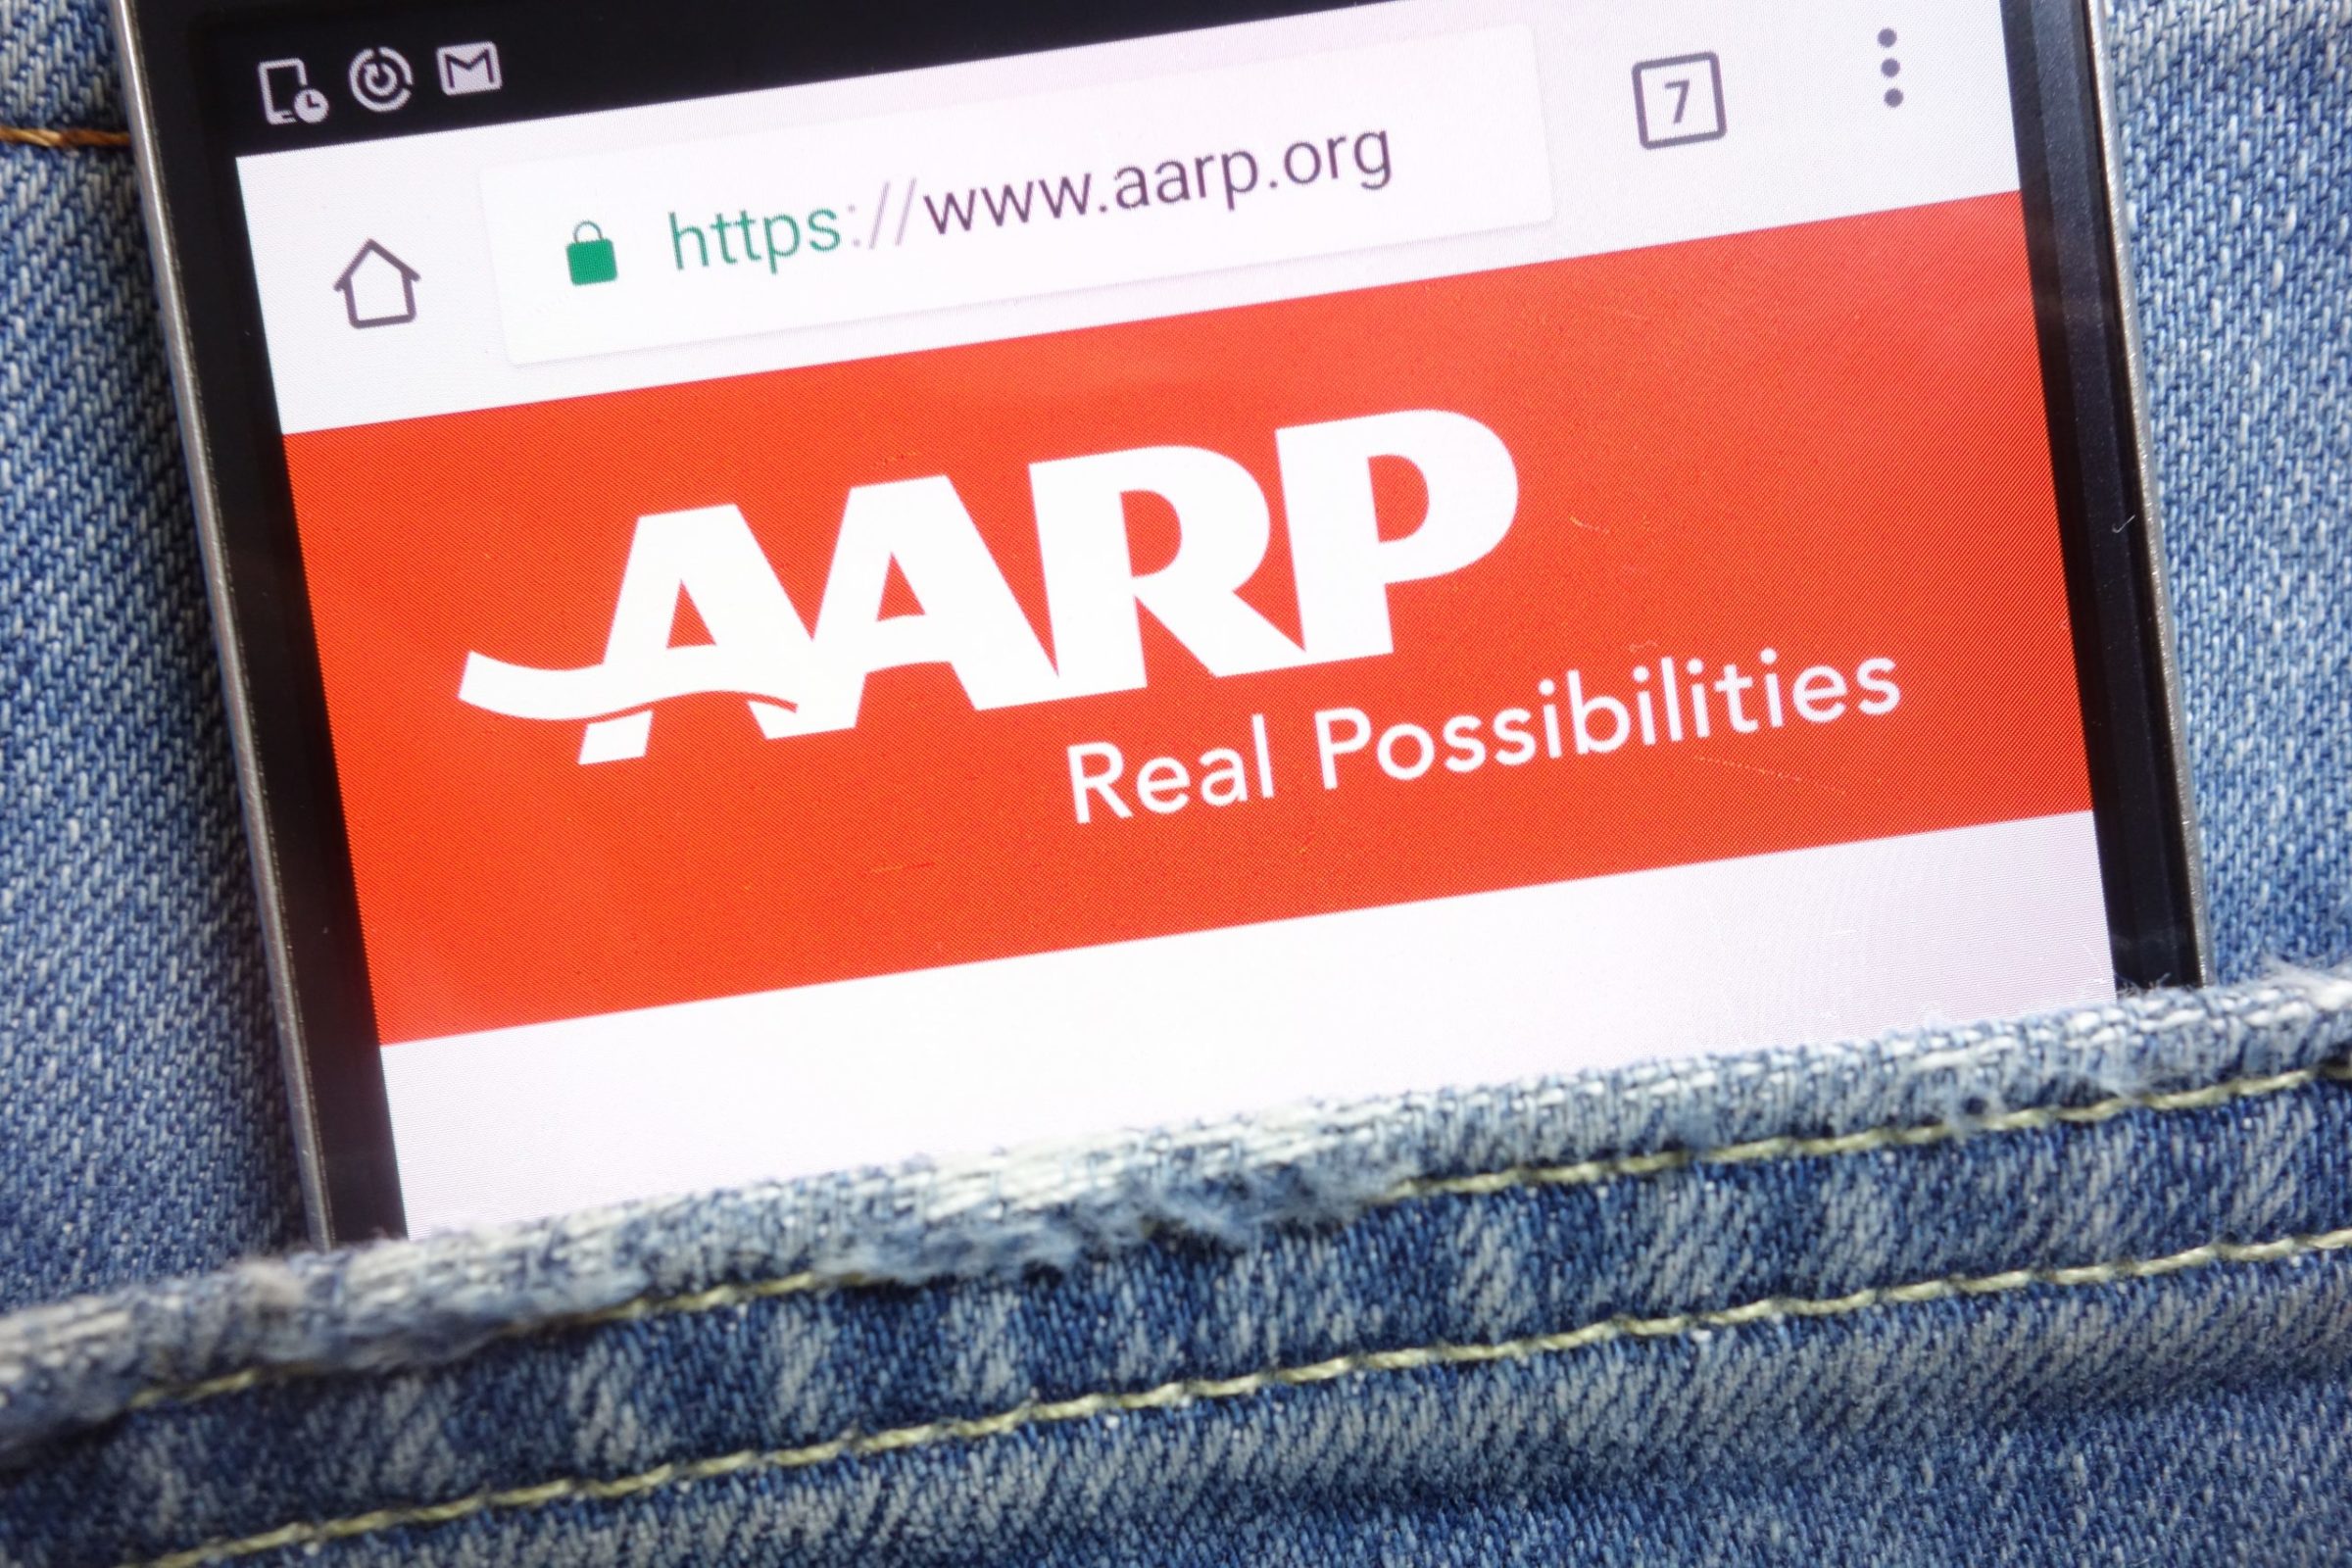 AARP Medical Alert Recommendations Discussed